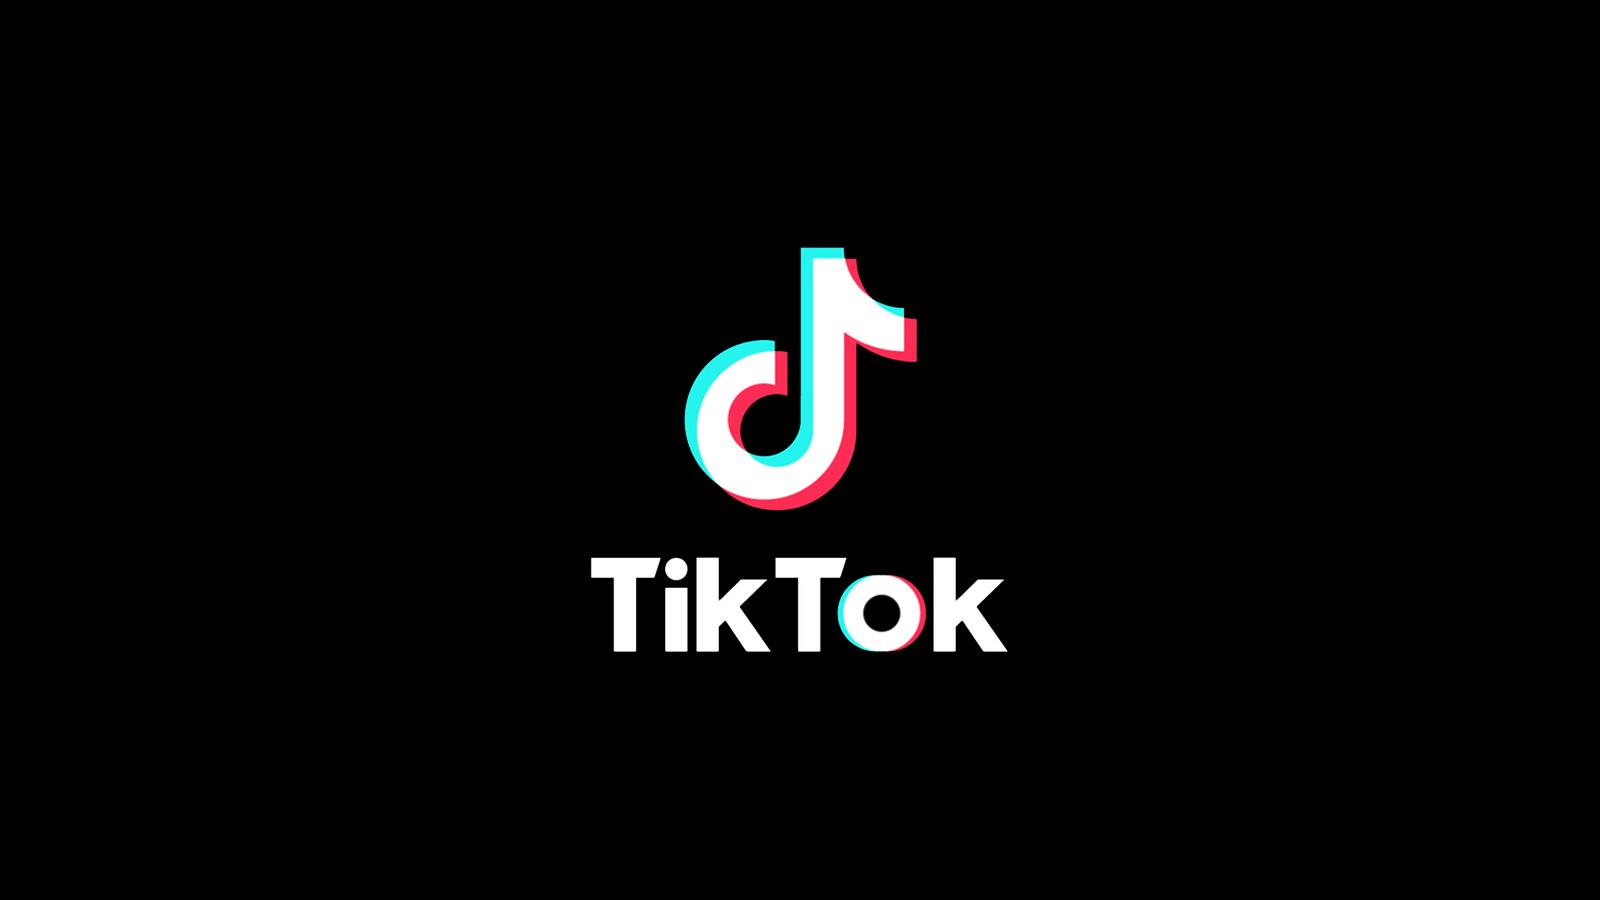 The TikTok logo on a black screen